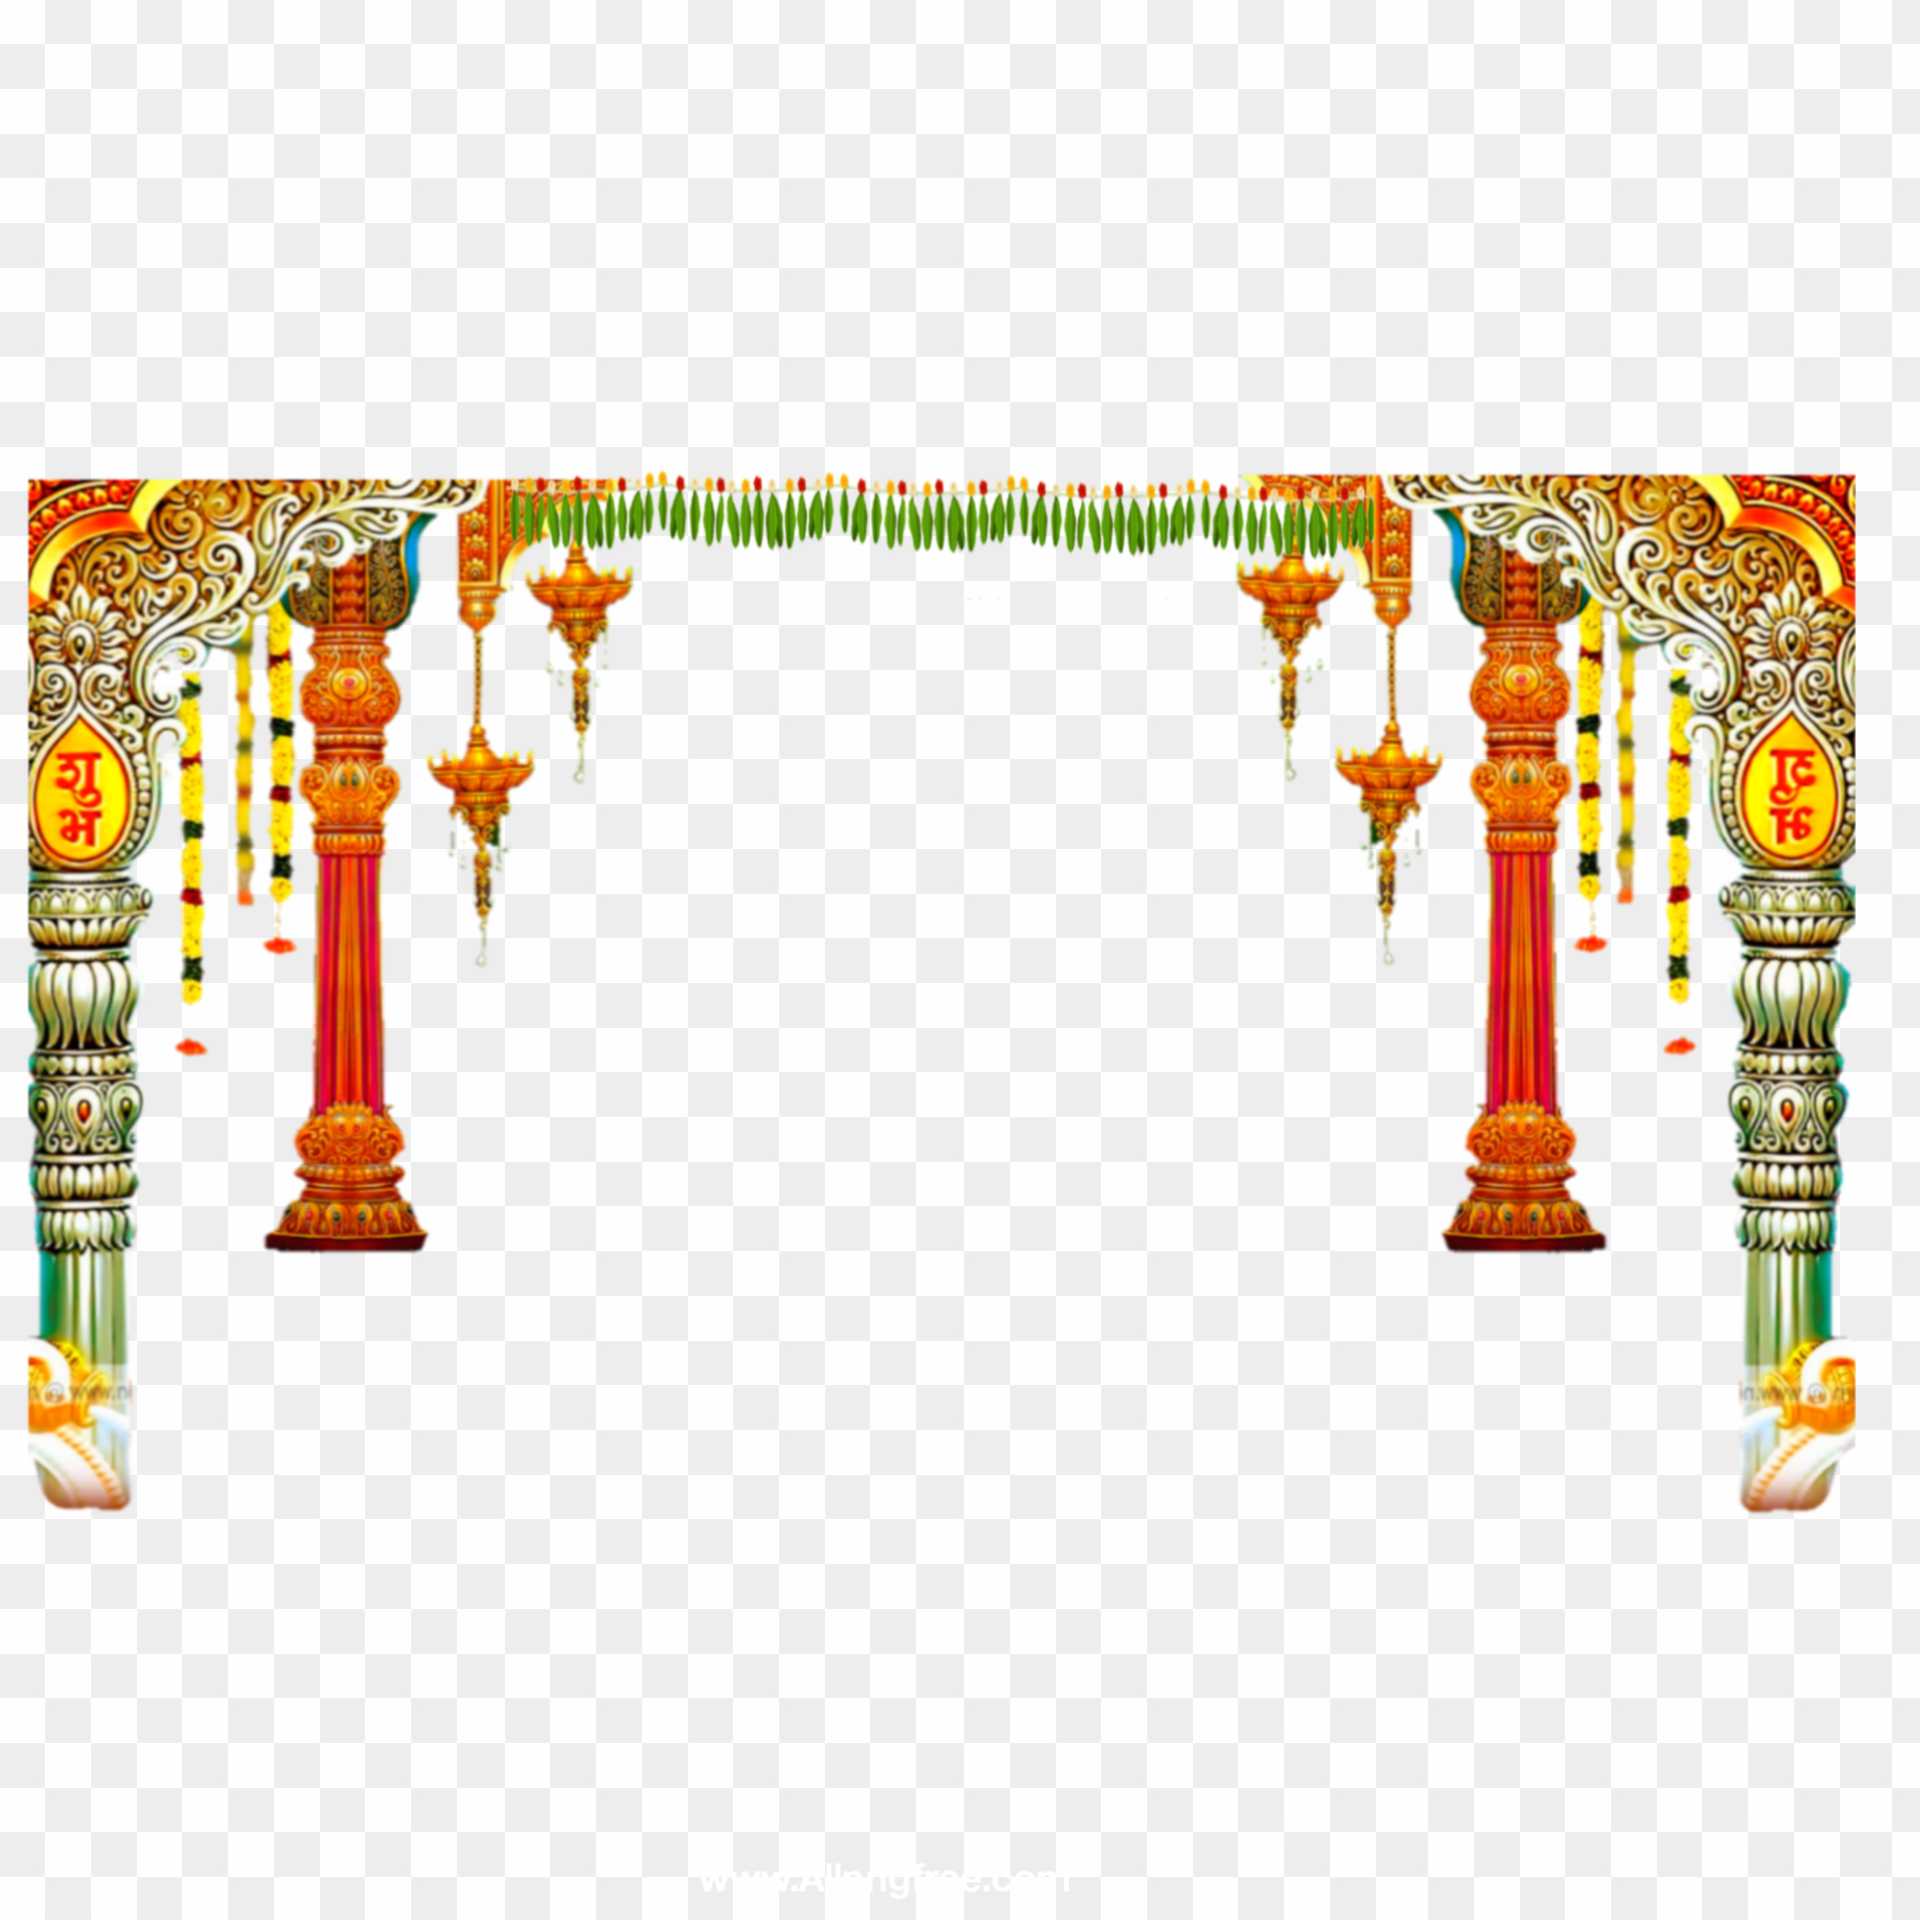 Hindu temple Mandir decoration PNG images